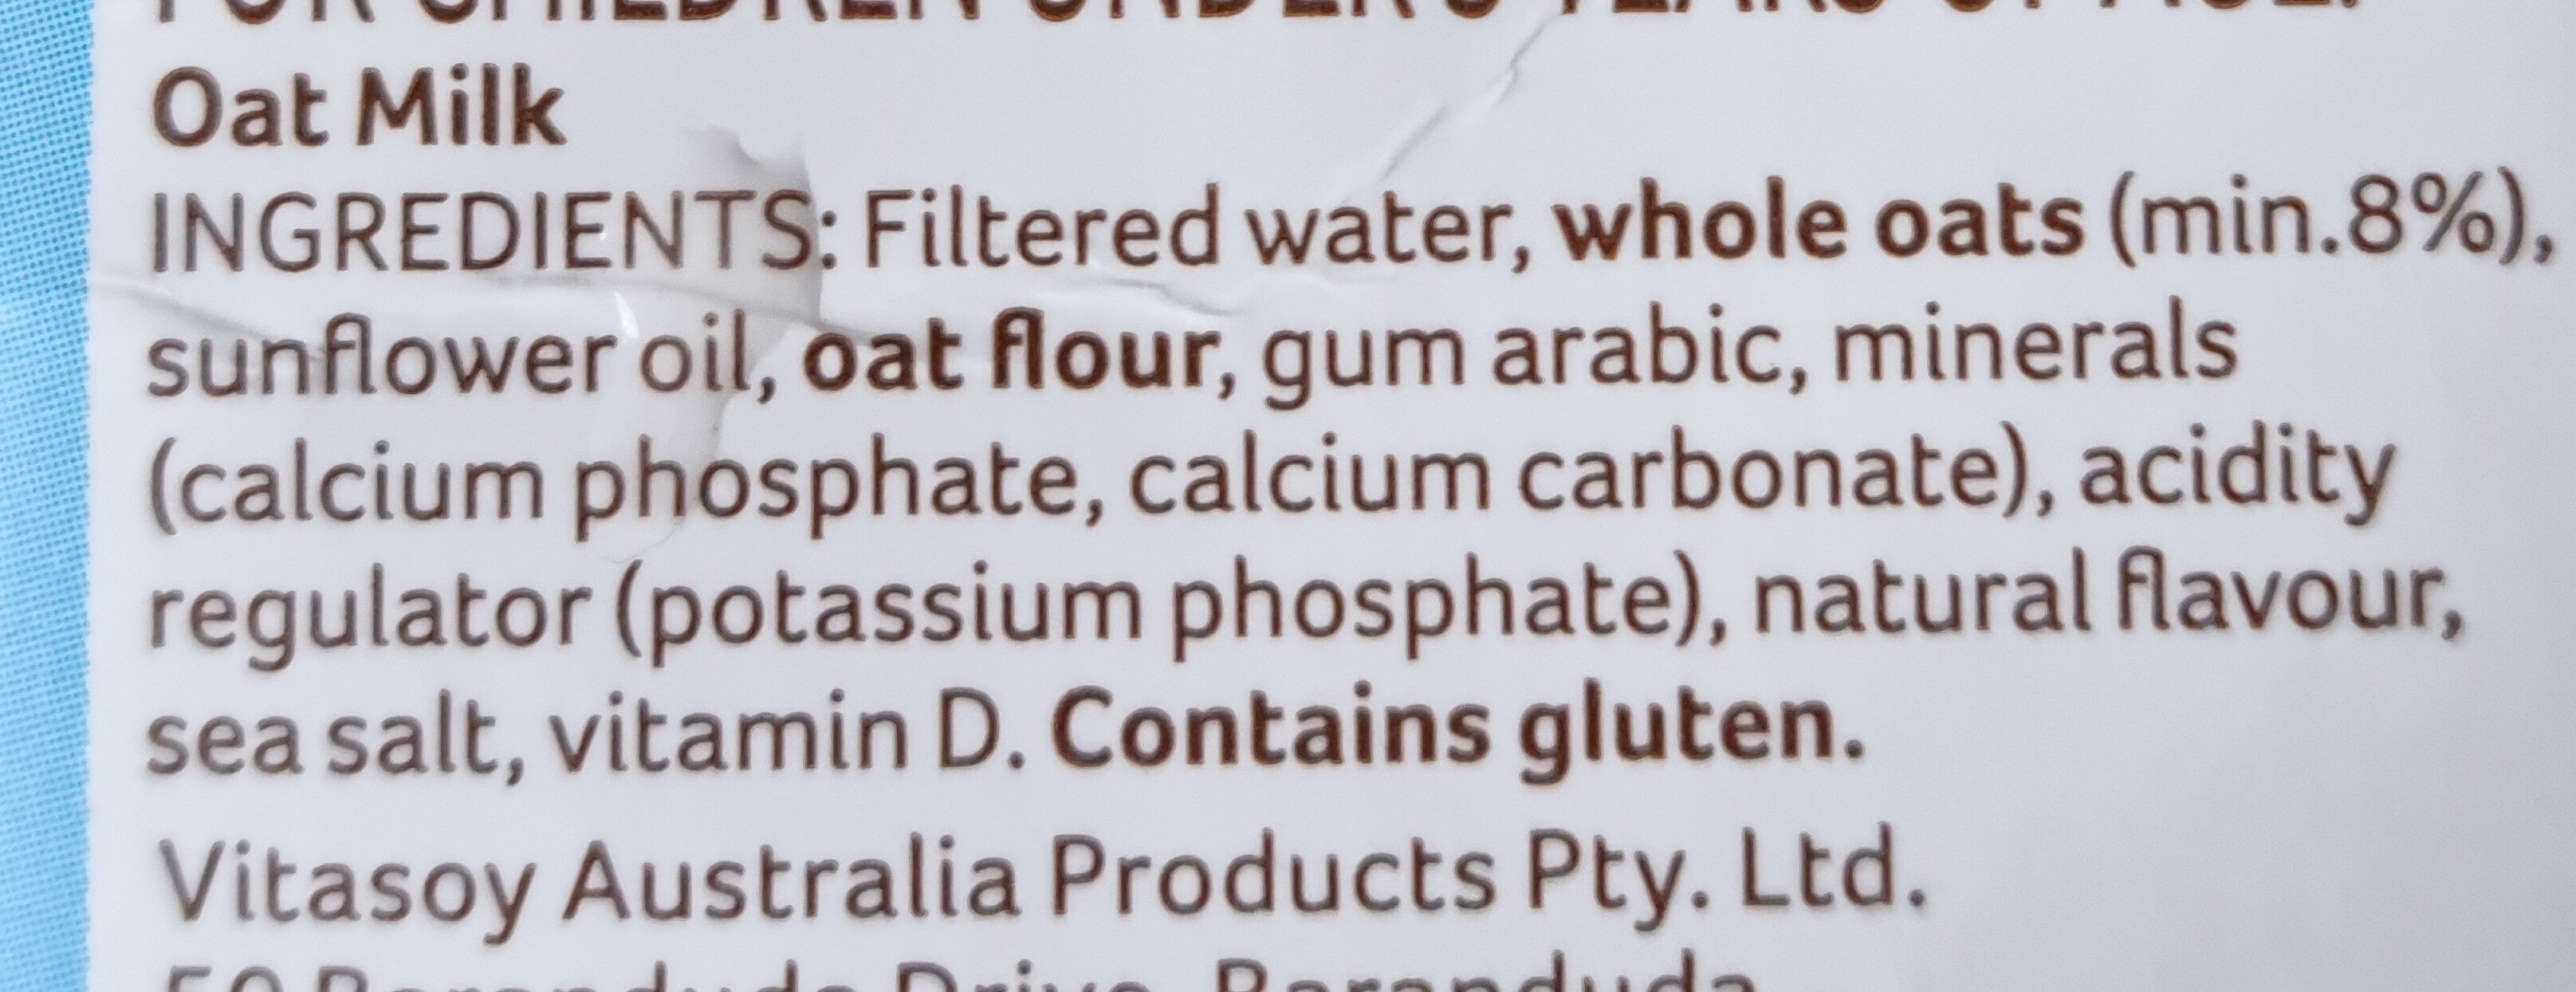 Oat milk - Ingredients